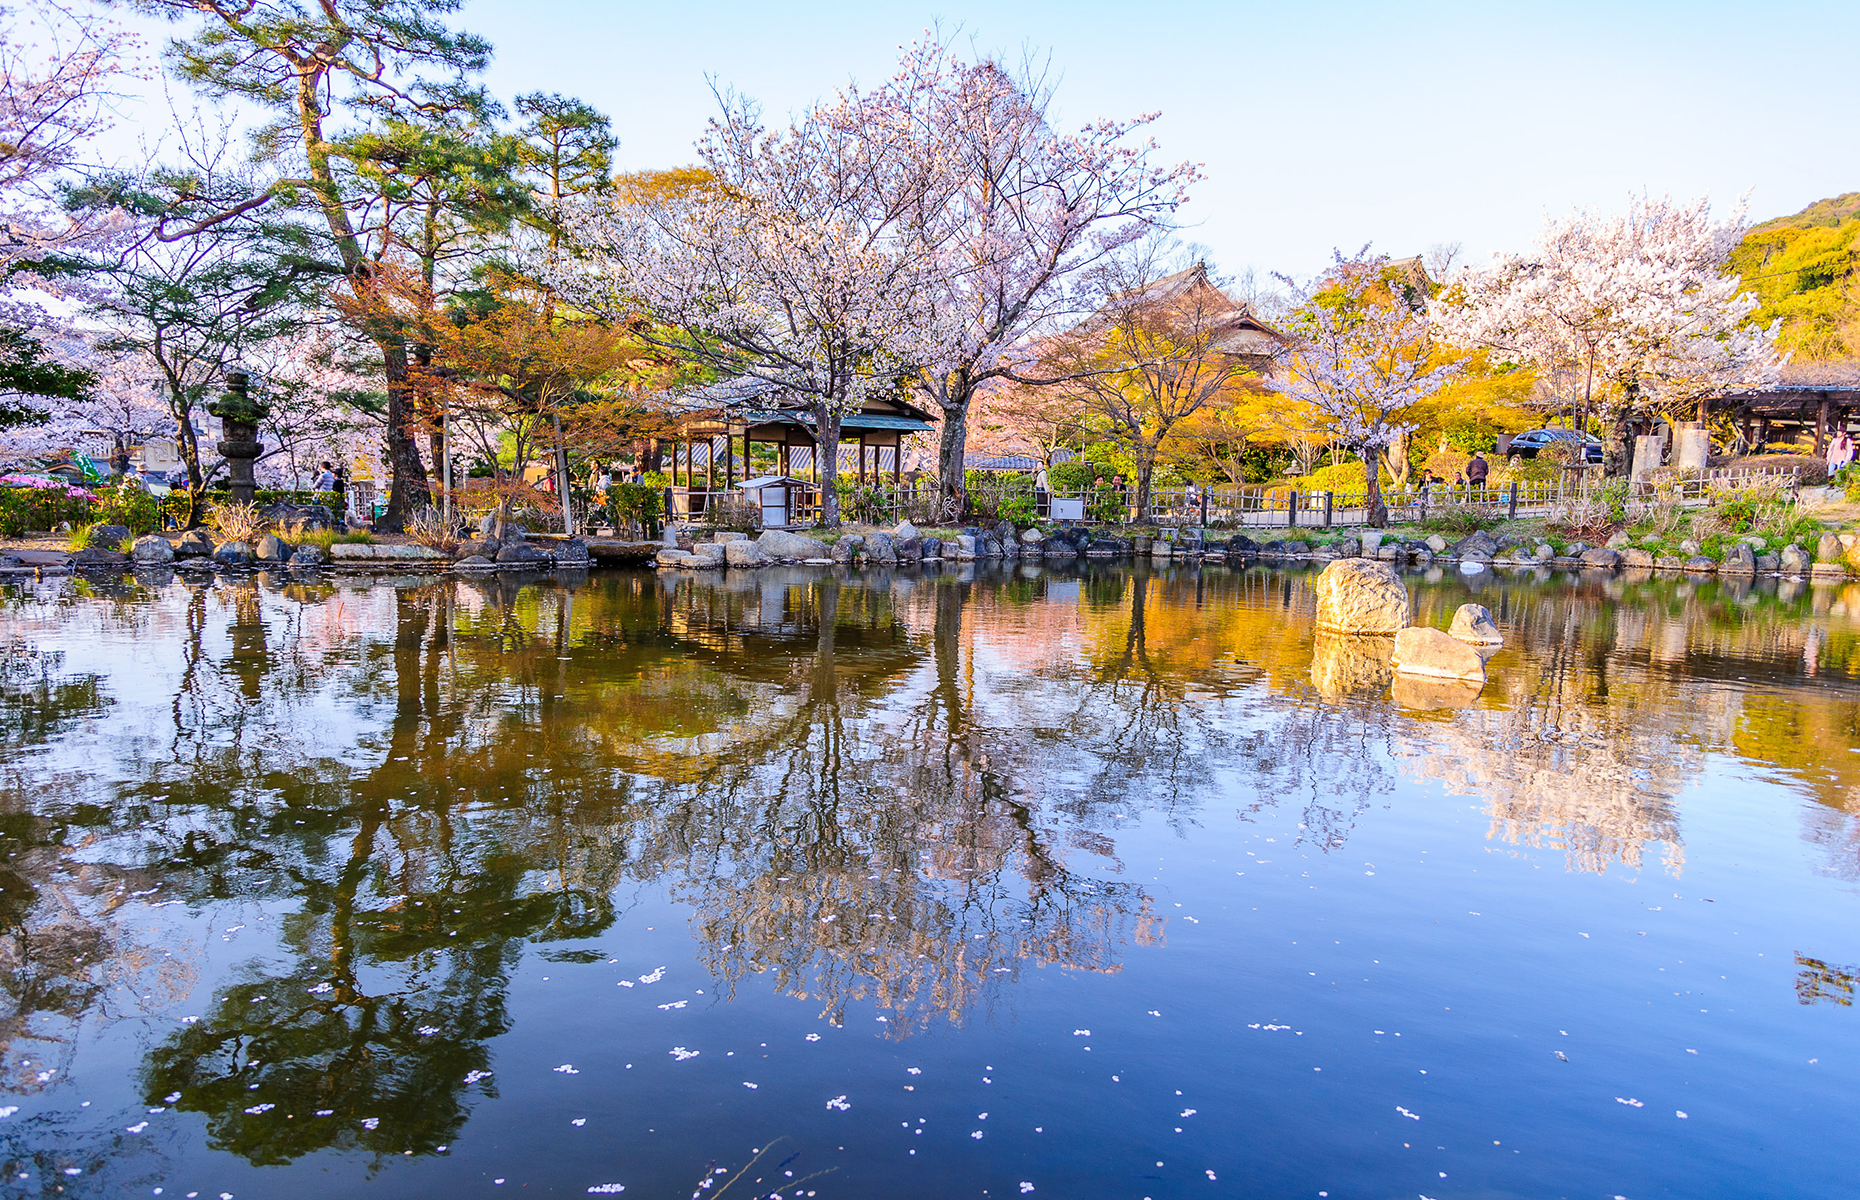 Maruyama Park, Kyoto, Japan. (Image: Saknarong Tayaset/Shutterstock)